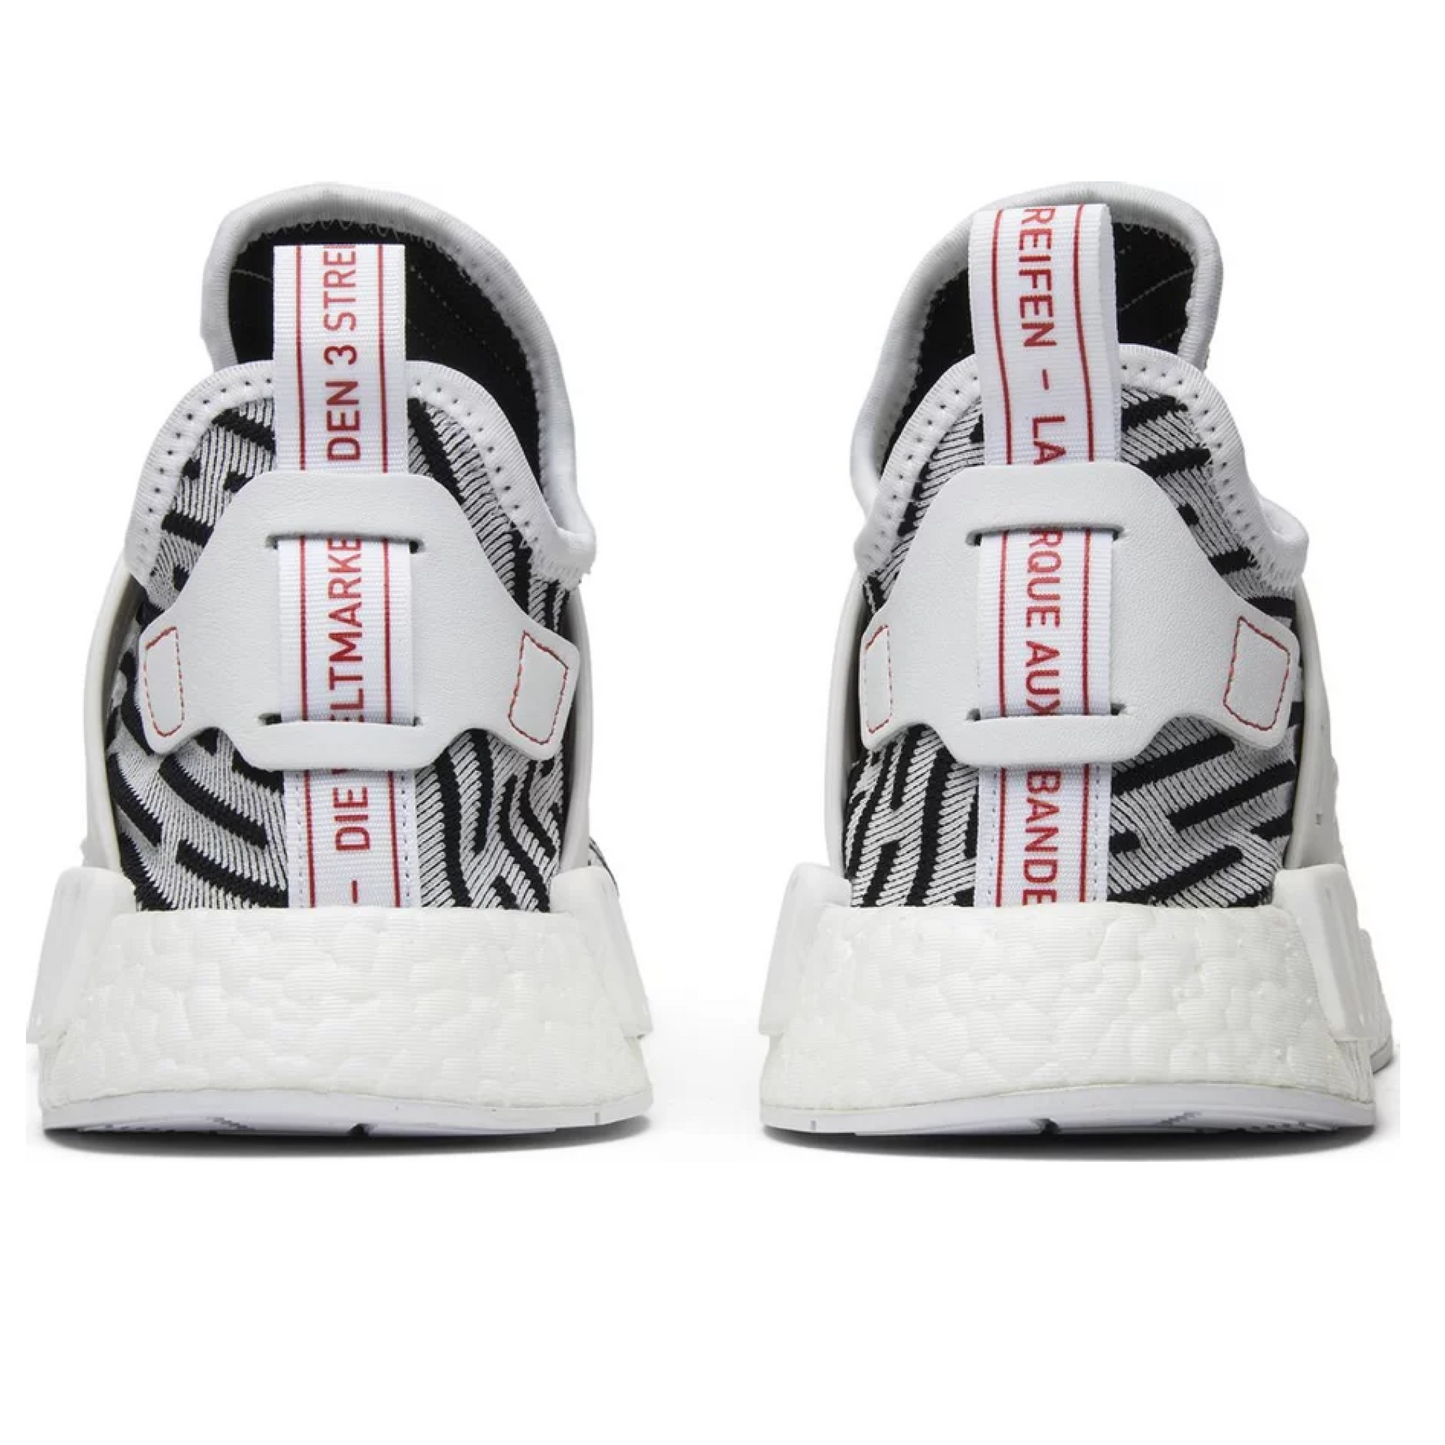 Adidas NMD XR1 Zebra